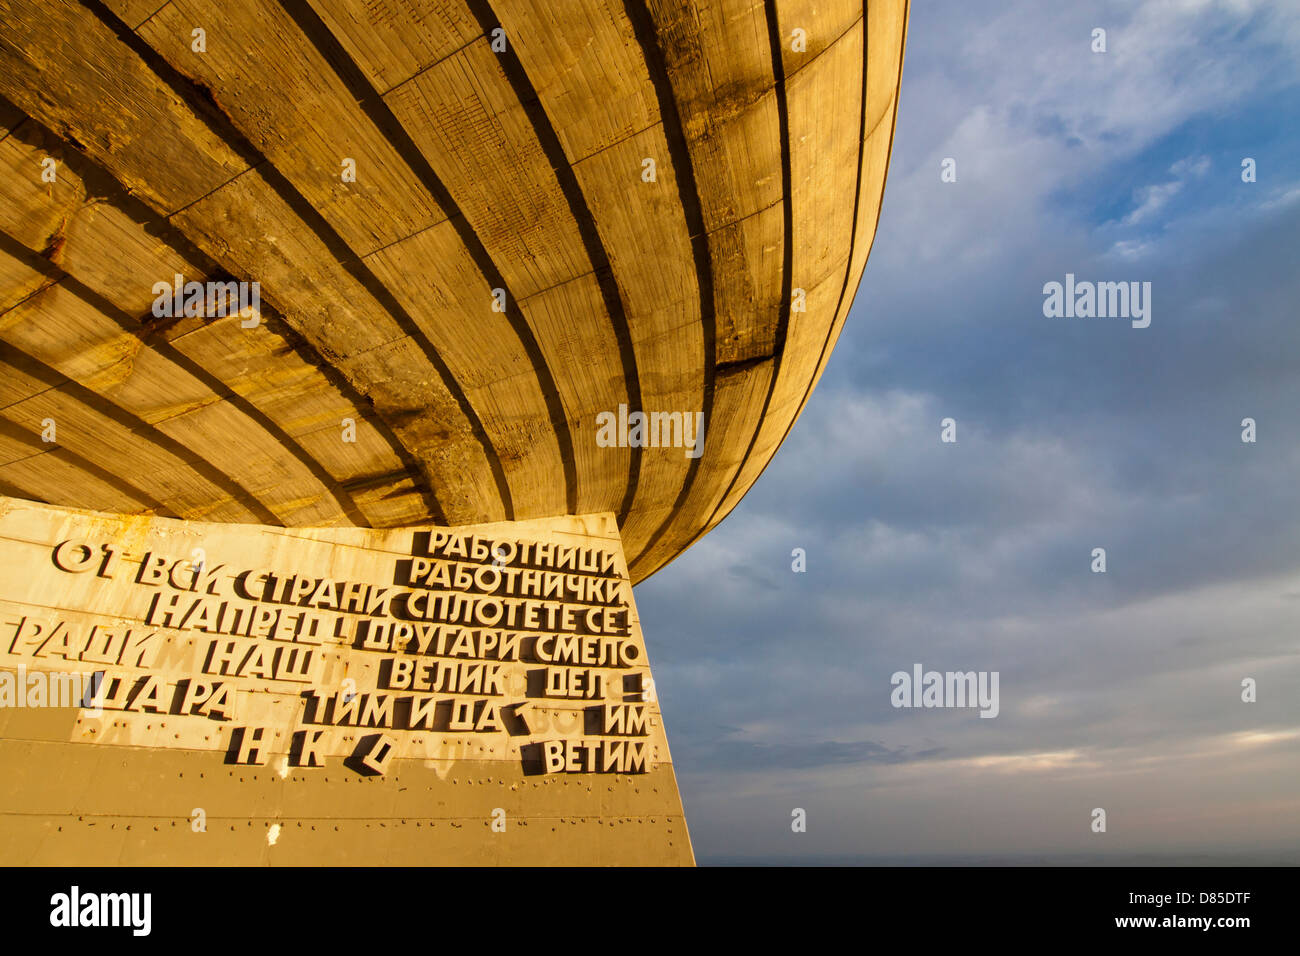 Communist party slogans on the communist-era Buzludzha monument in central Bulgaria Stock Photo